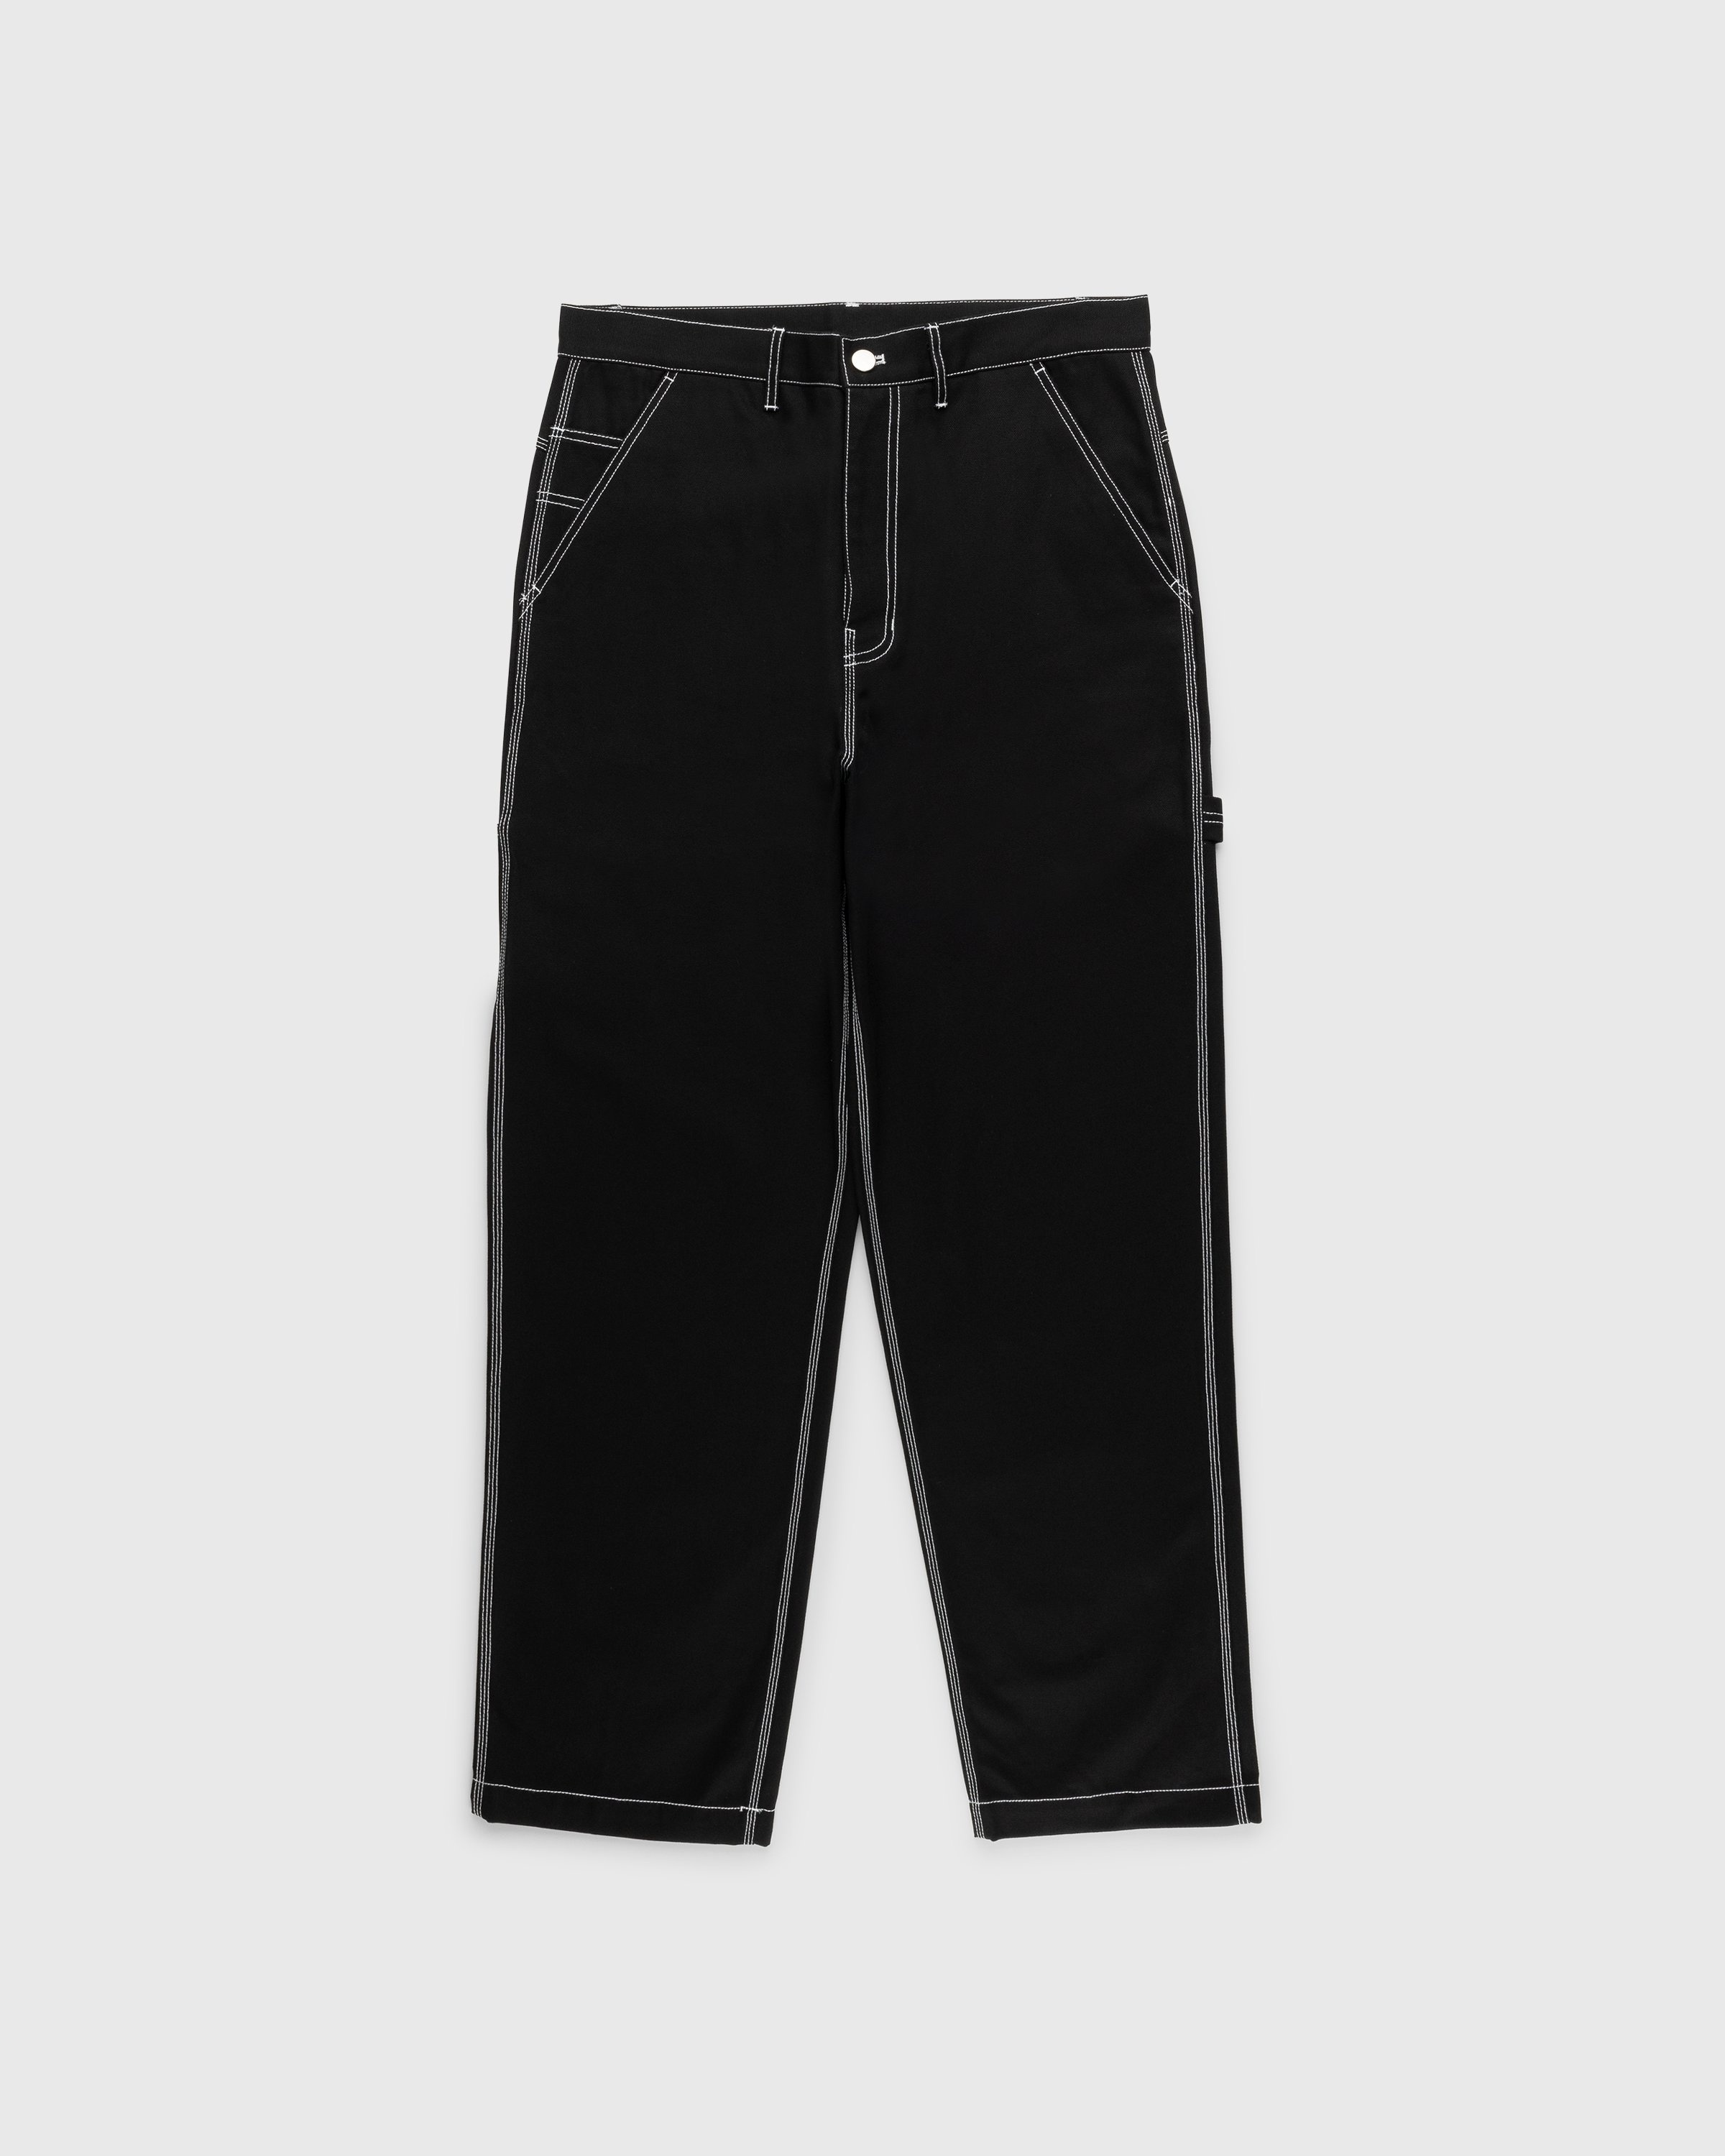 RUF x Highsnobiety – Cotton Work Pants Black - Work Pants - Black - Image 2